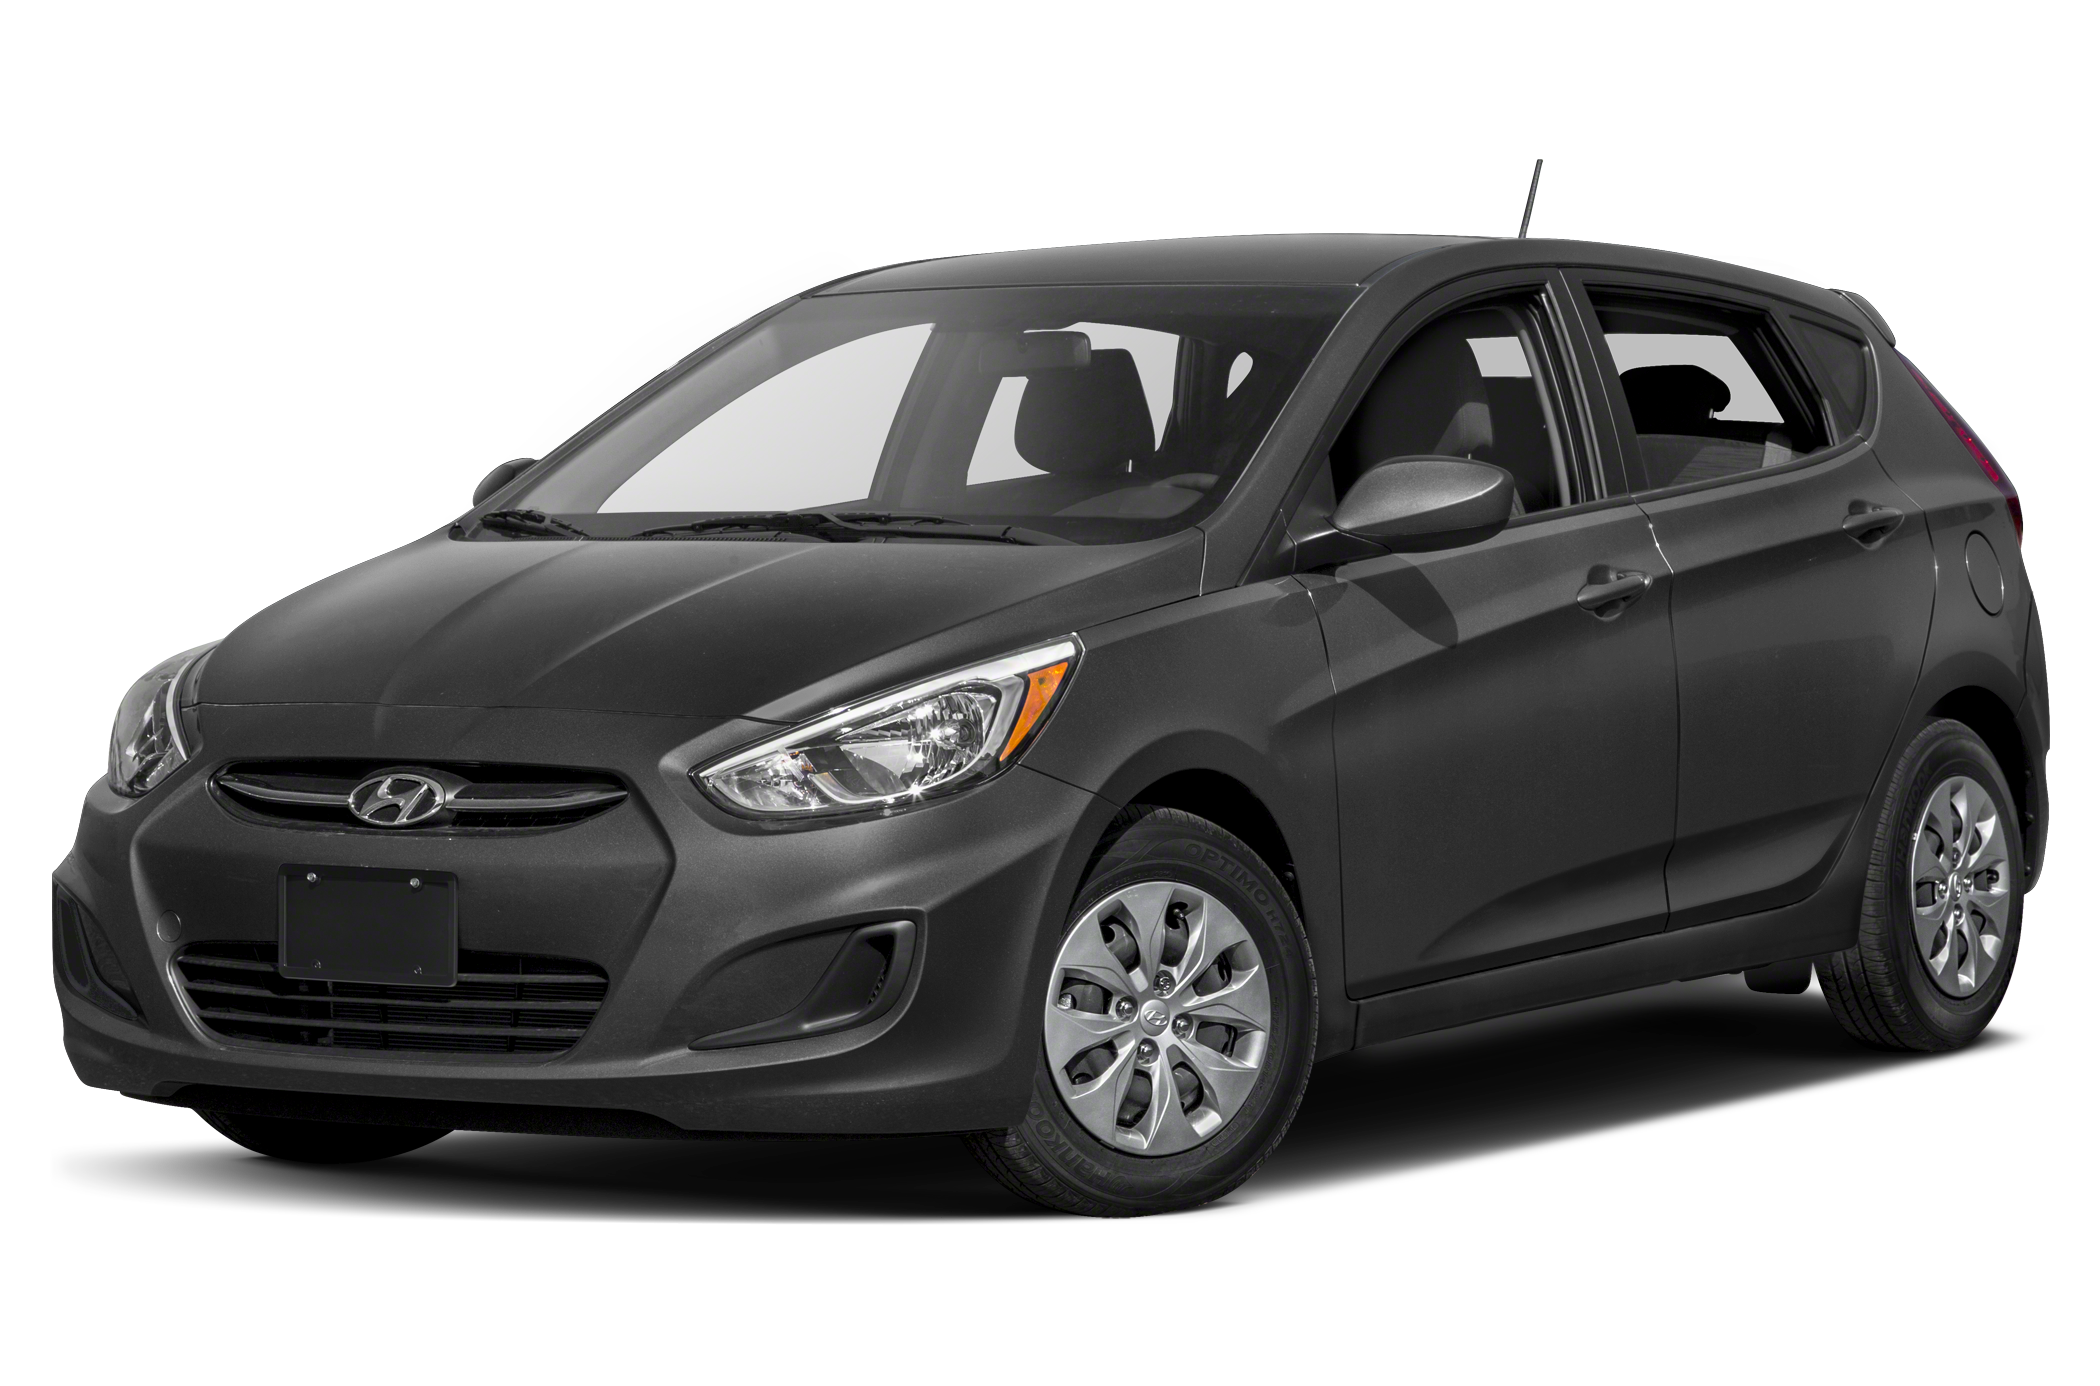 2017 Hyundai Accent - View Specs, Prices & Photos - WHEELS.ca